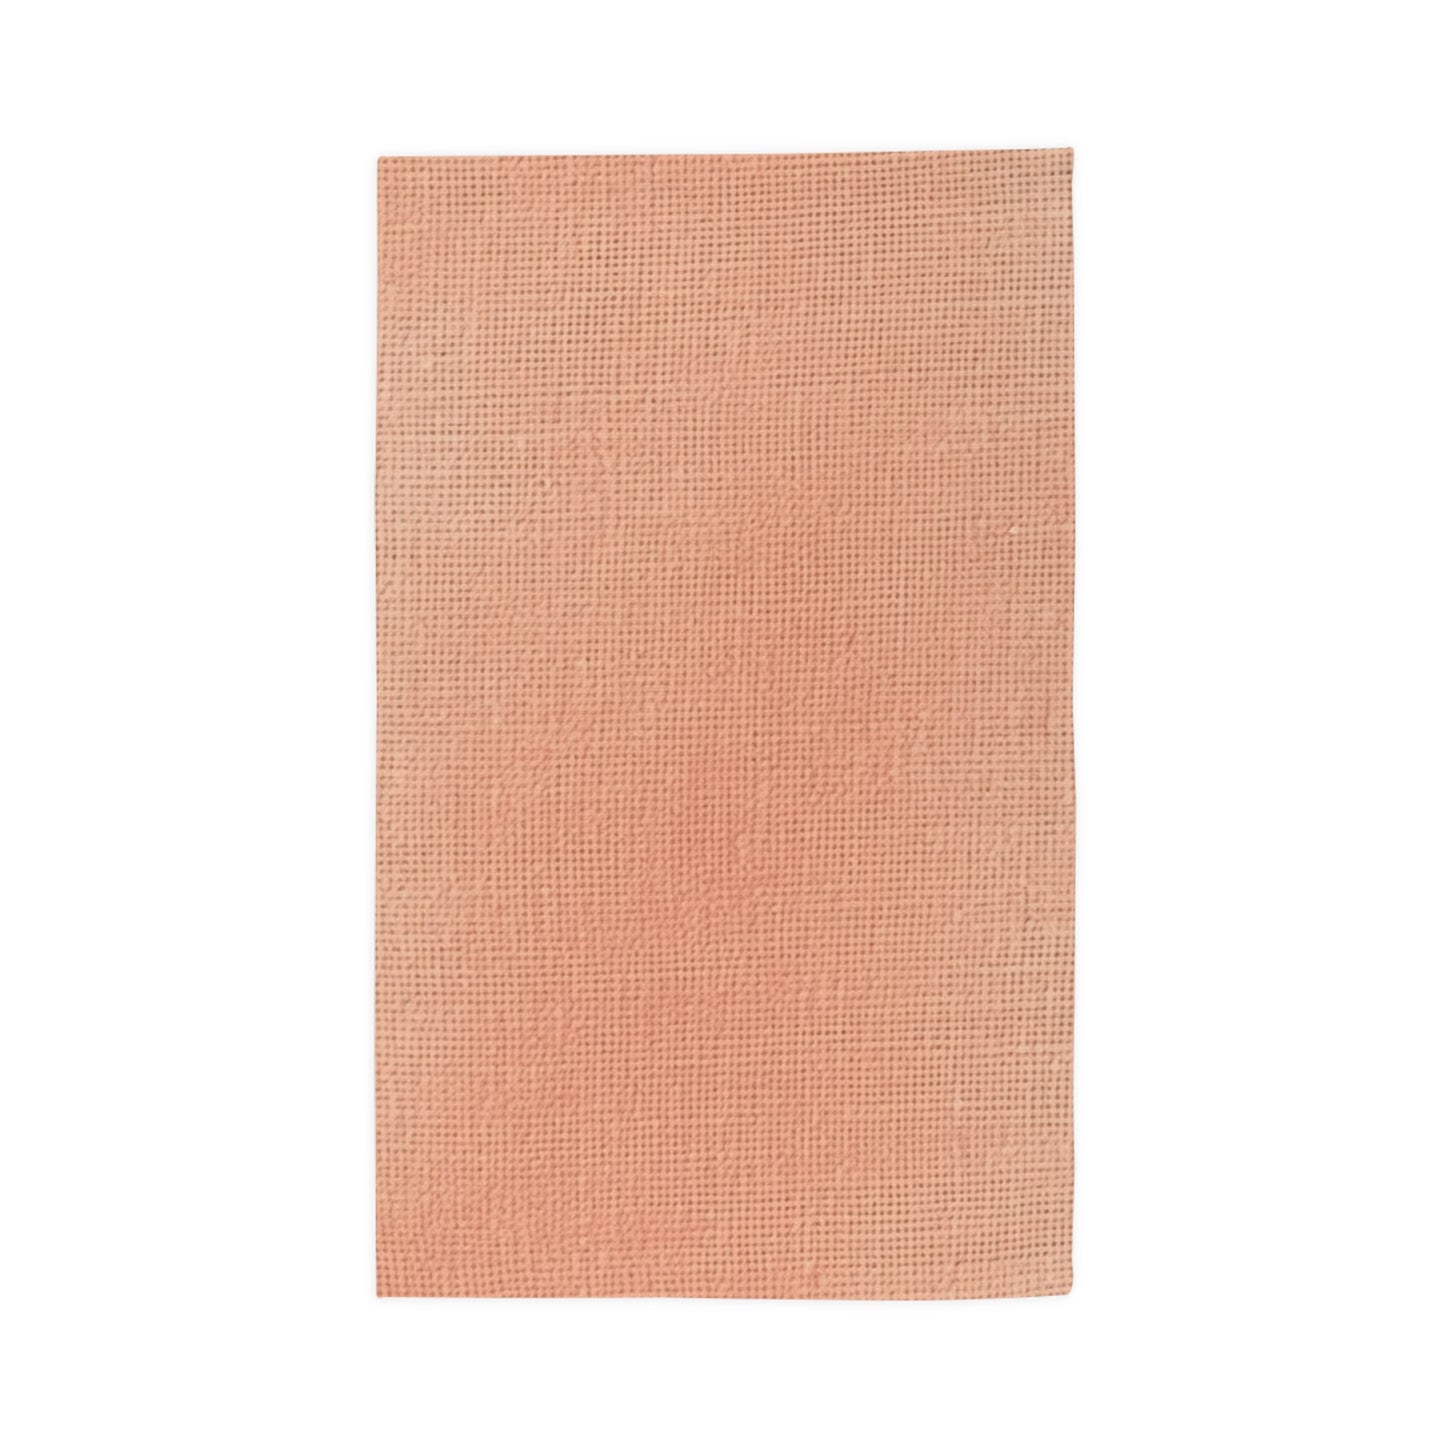 Soft Pink-Orange Peach: Denim-Inspired, Lush Fabric - Dobby Rug